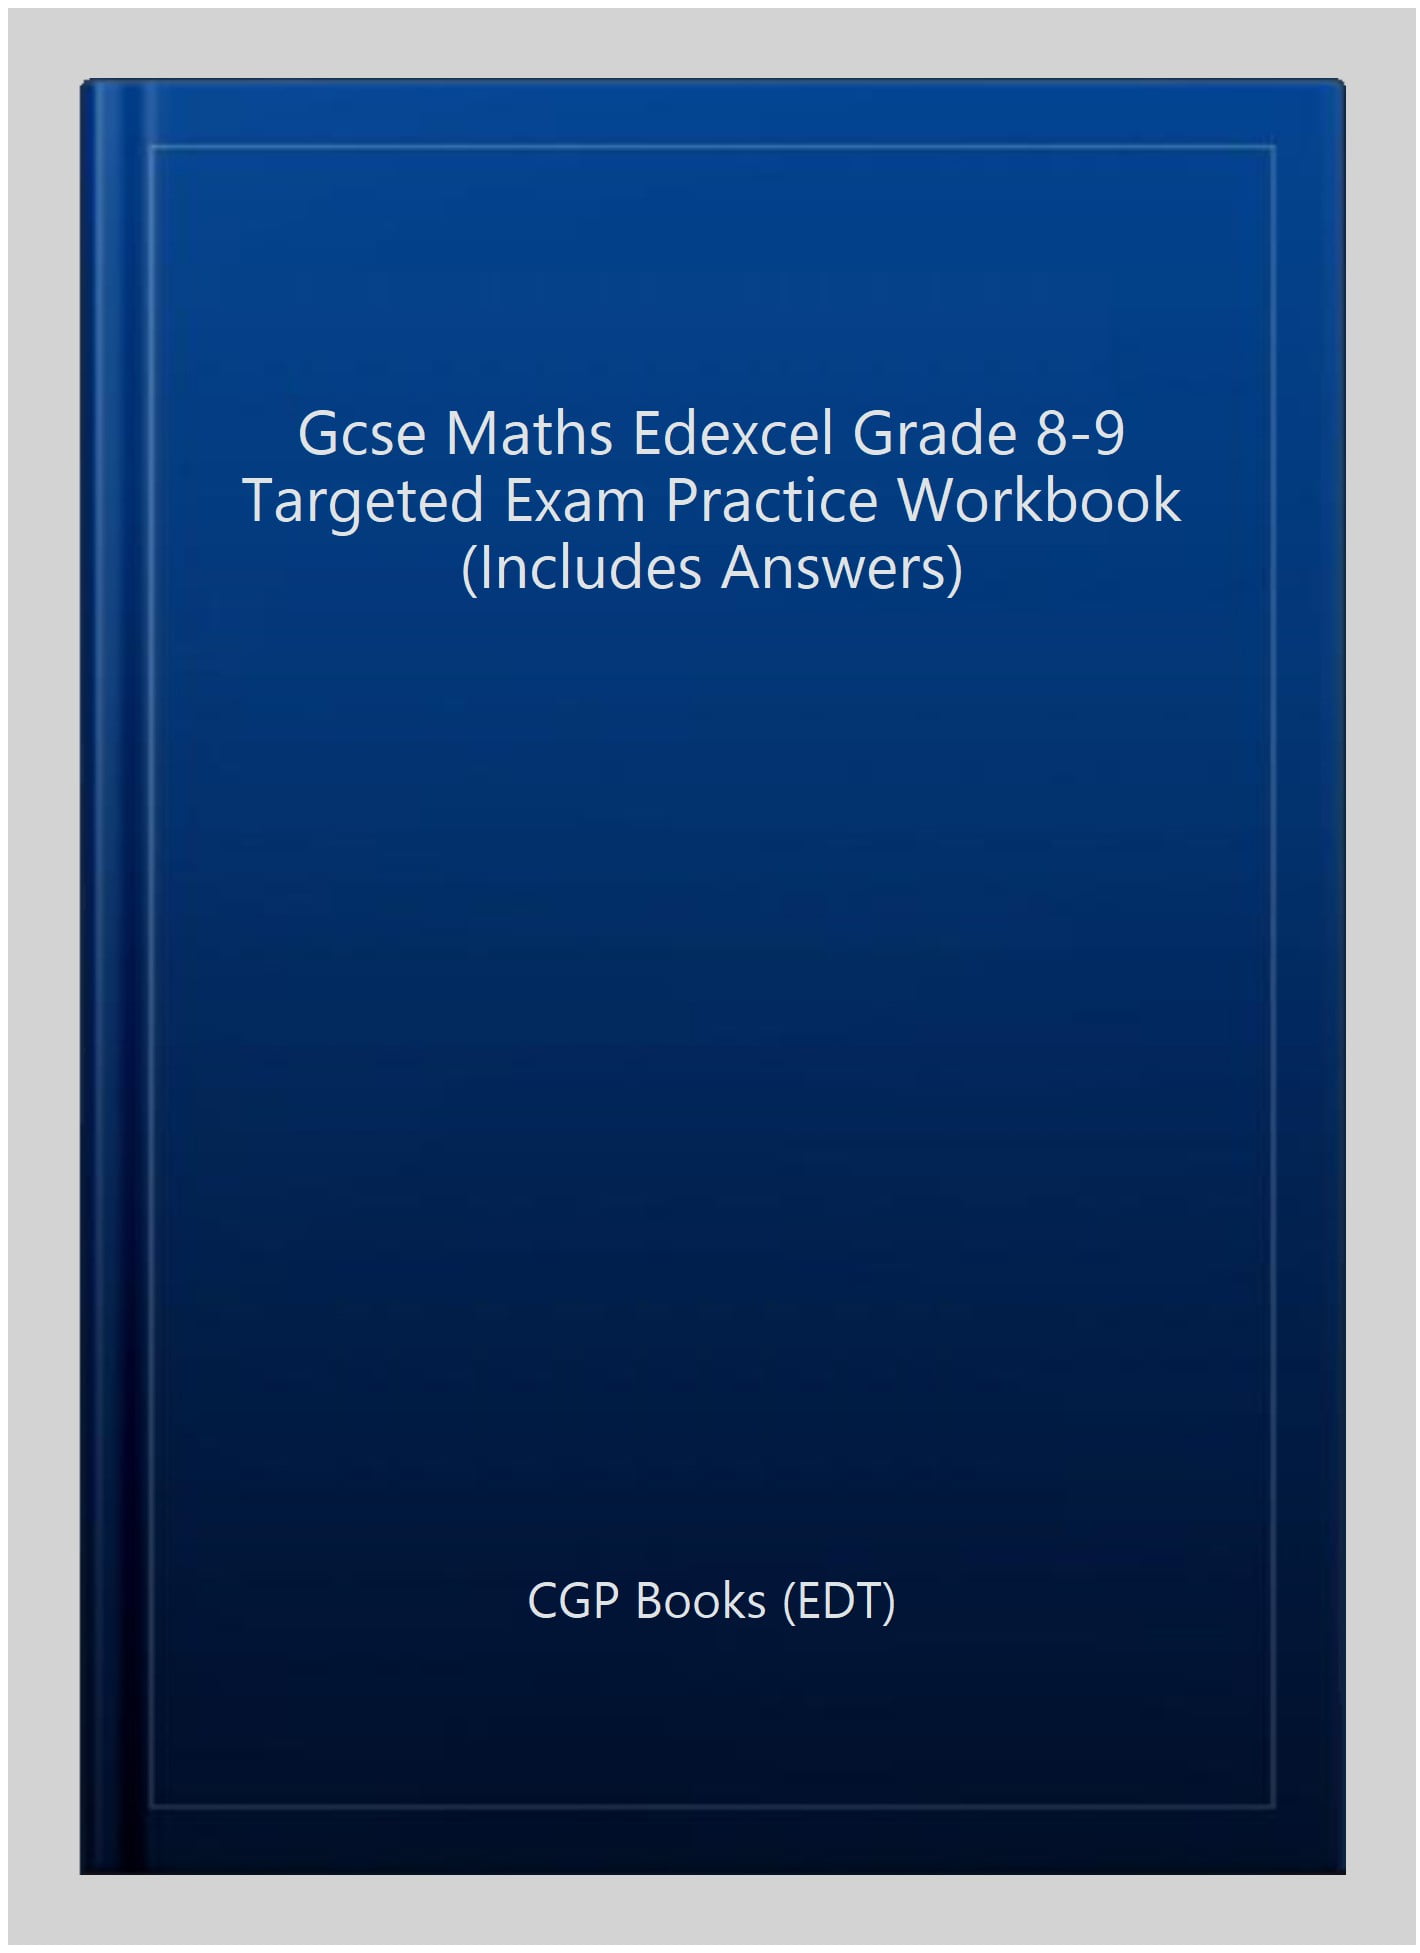 Gcse Maths Edexcel Grade 8 9 Targeted Exam Practice Workbook Includes Answers Walmart Com Walmart Com